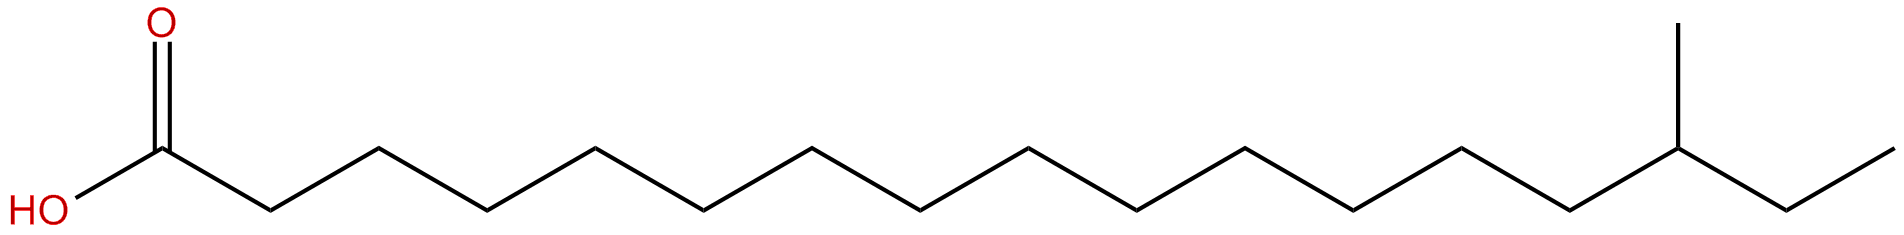 Image of 15-methylheptadecanoic acid